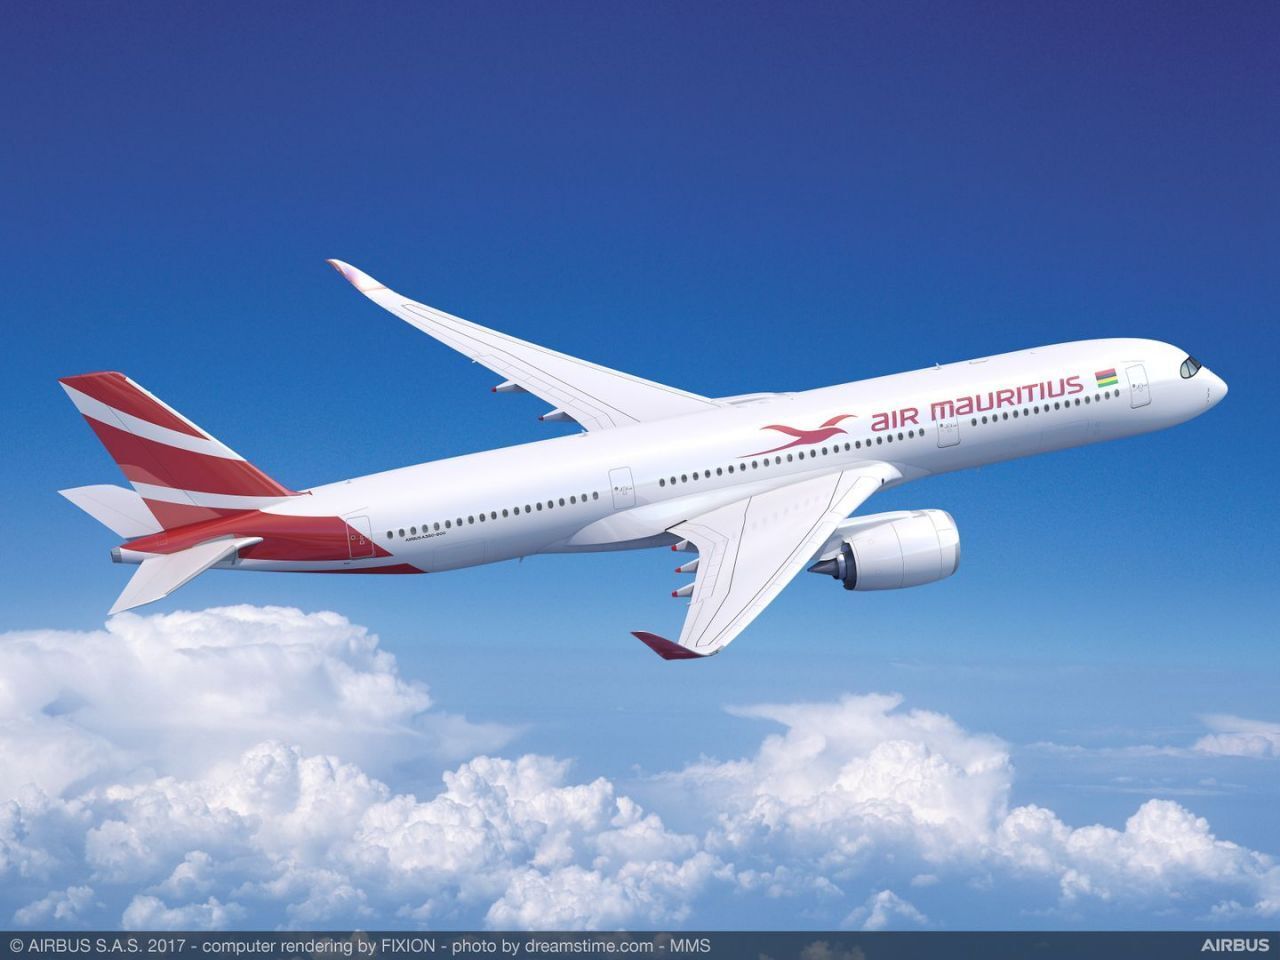 Air Mauritius Orders 3 Airbus A350 Aircraft Focus On Travel News